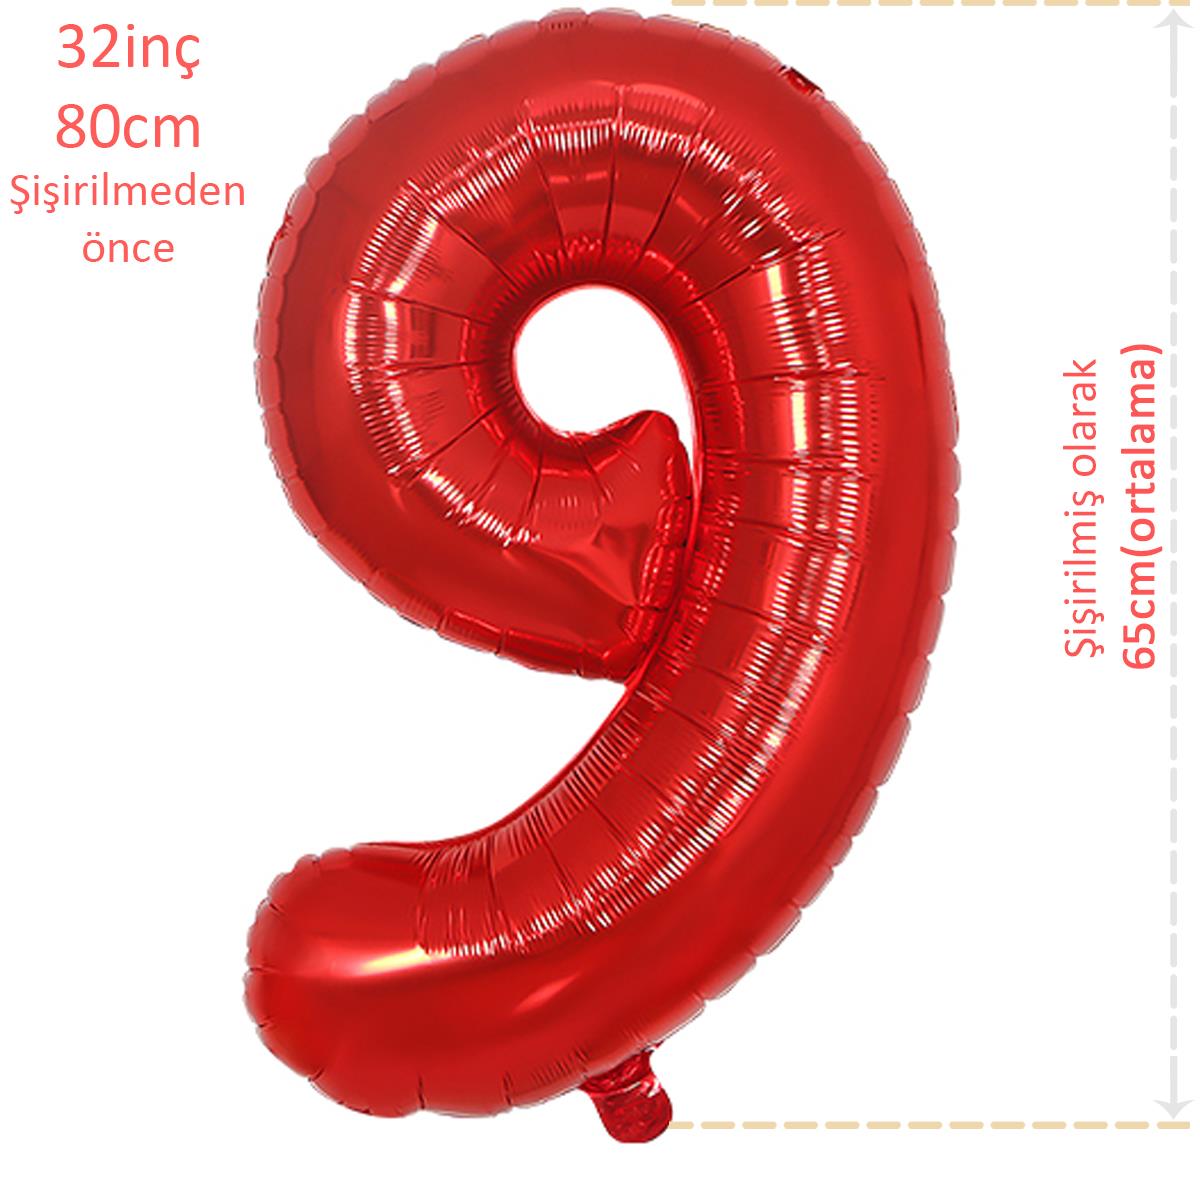 Rakam Folyo Balon Kırmızı 9 Rakamı 32inç 80cm